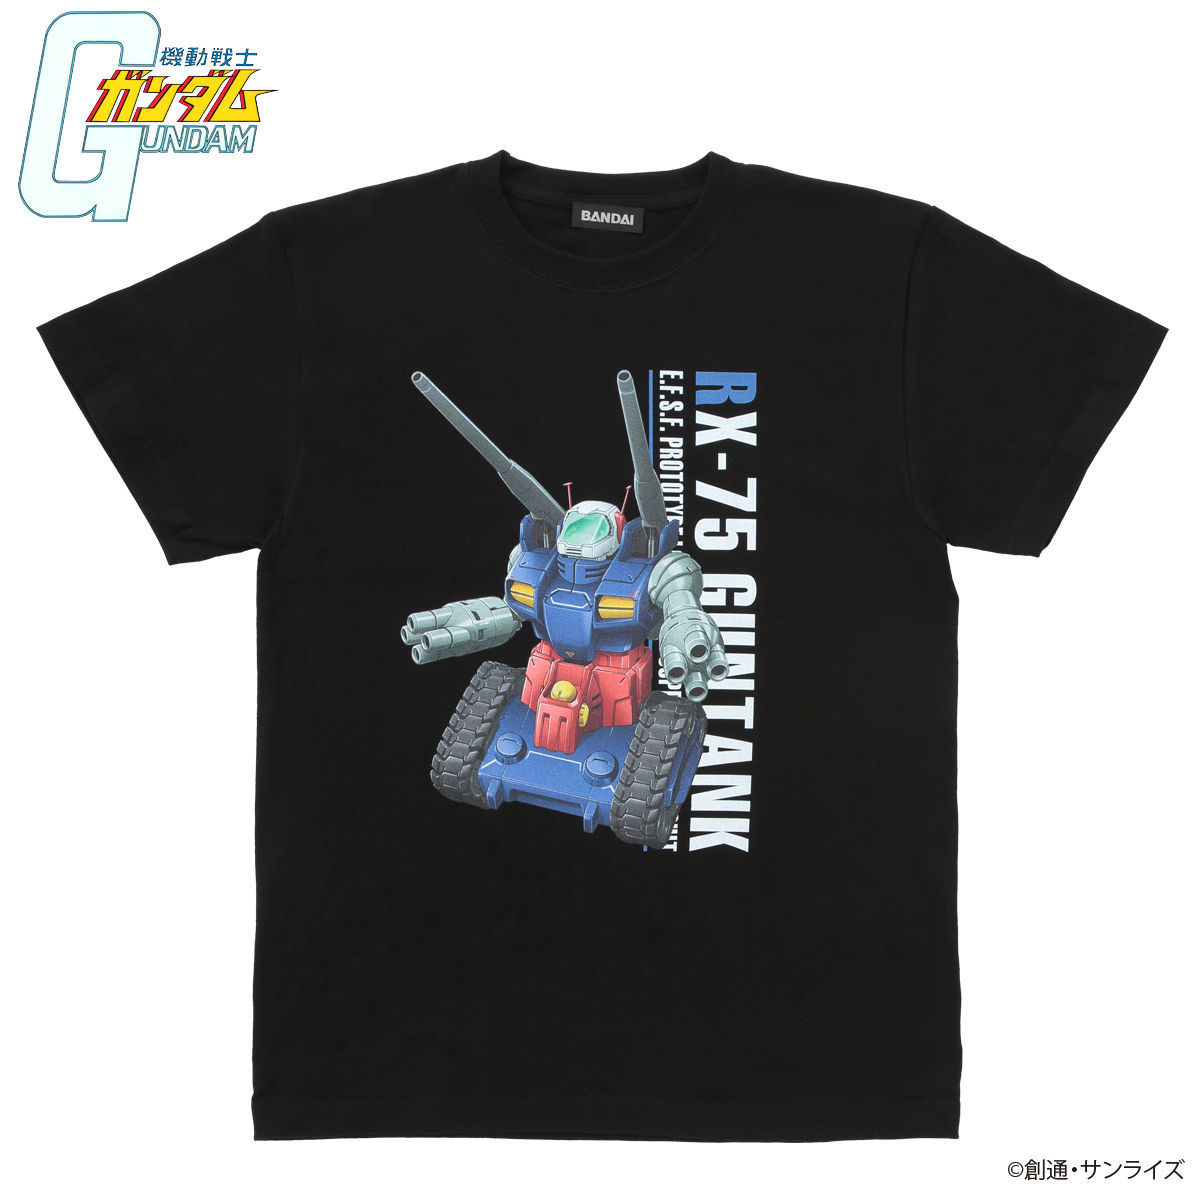 Mobile Suit Gundam Full Color T-shirt Version 2.0 